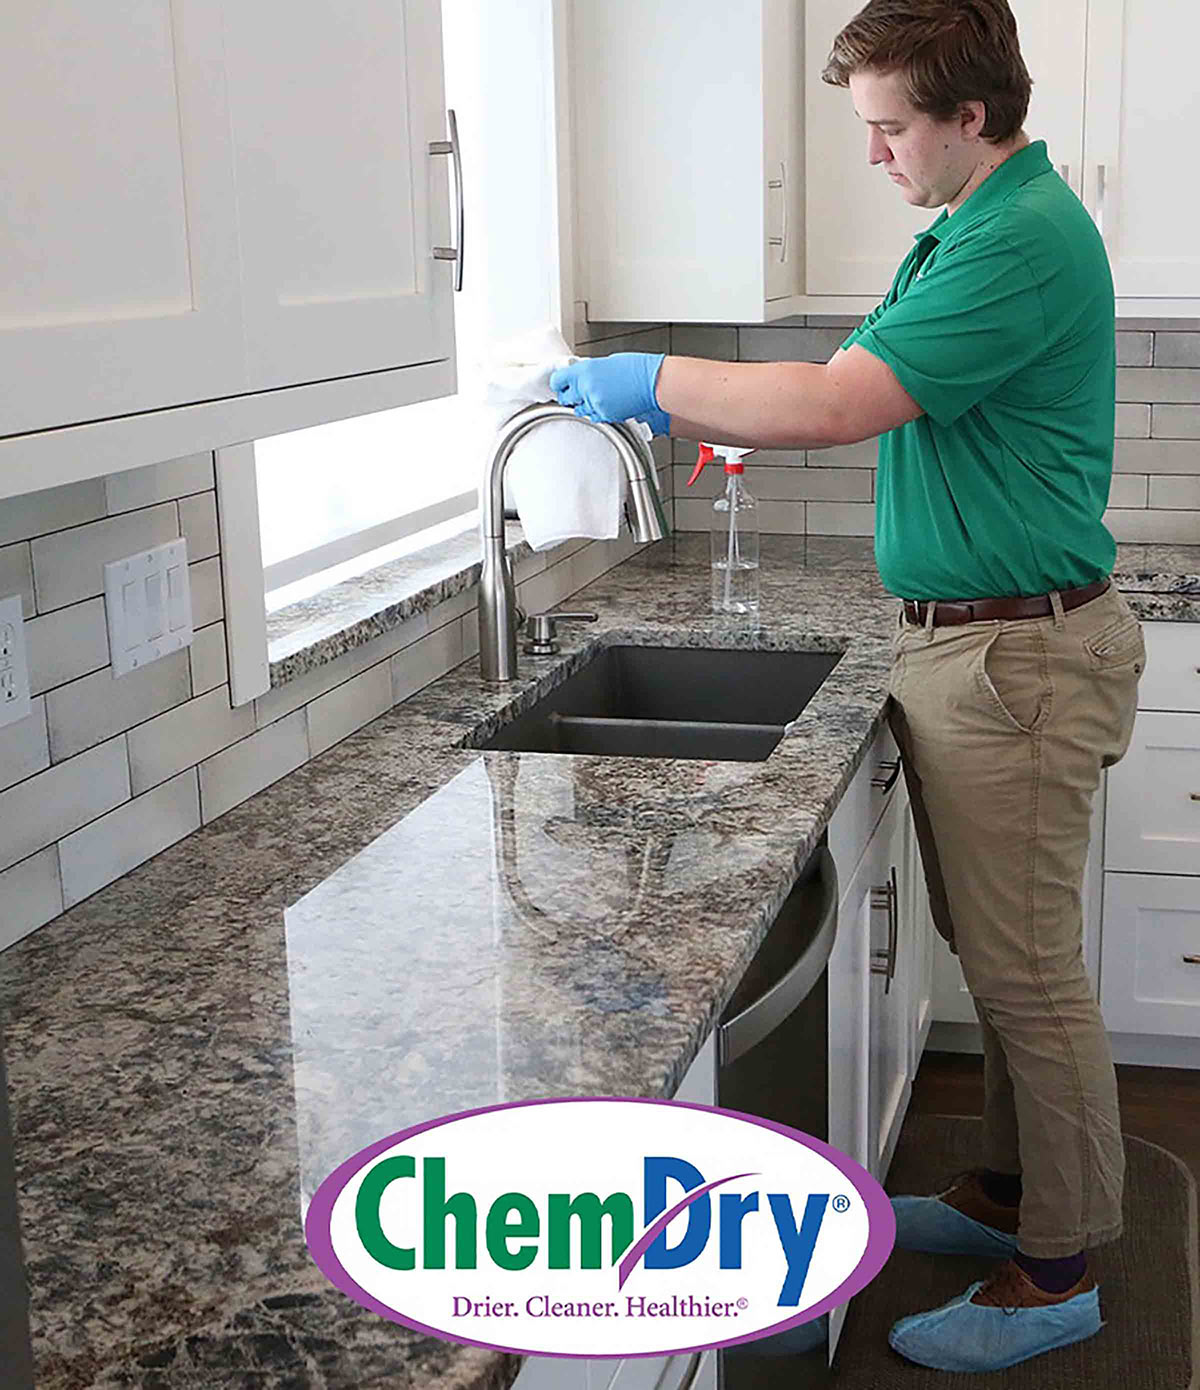 chem-dry employee at sink